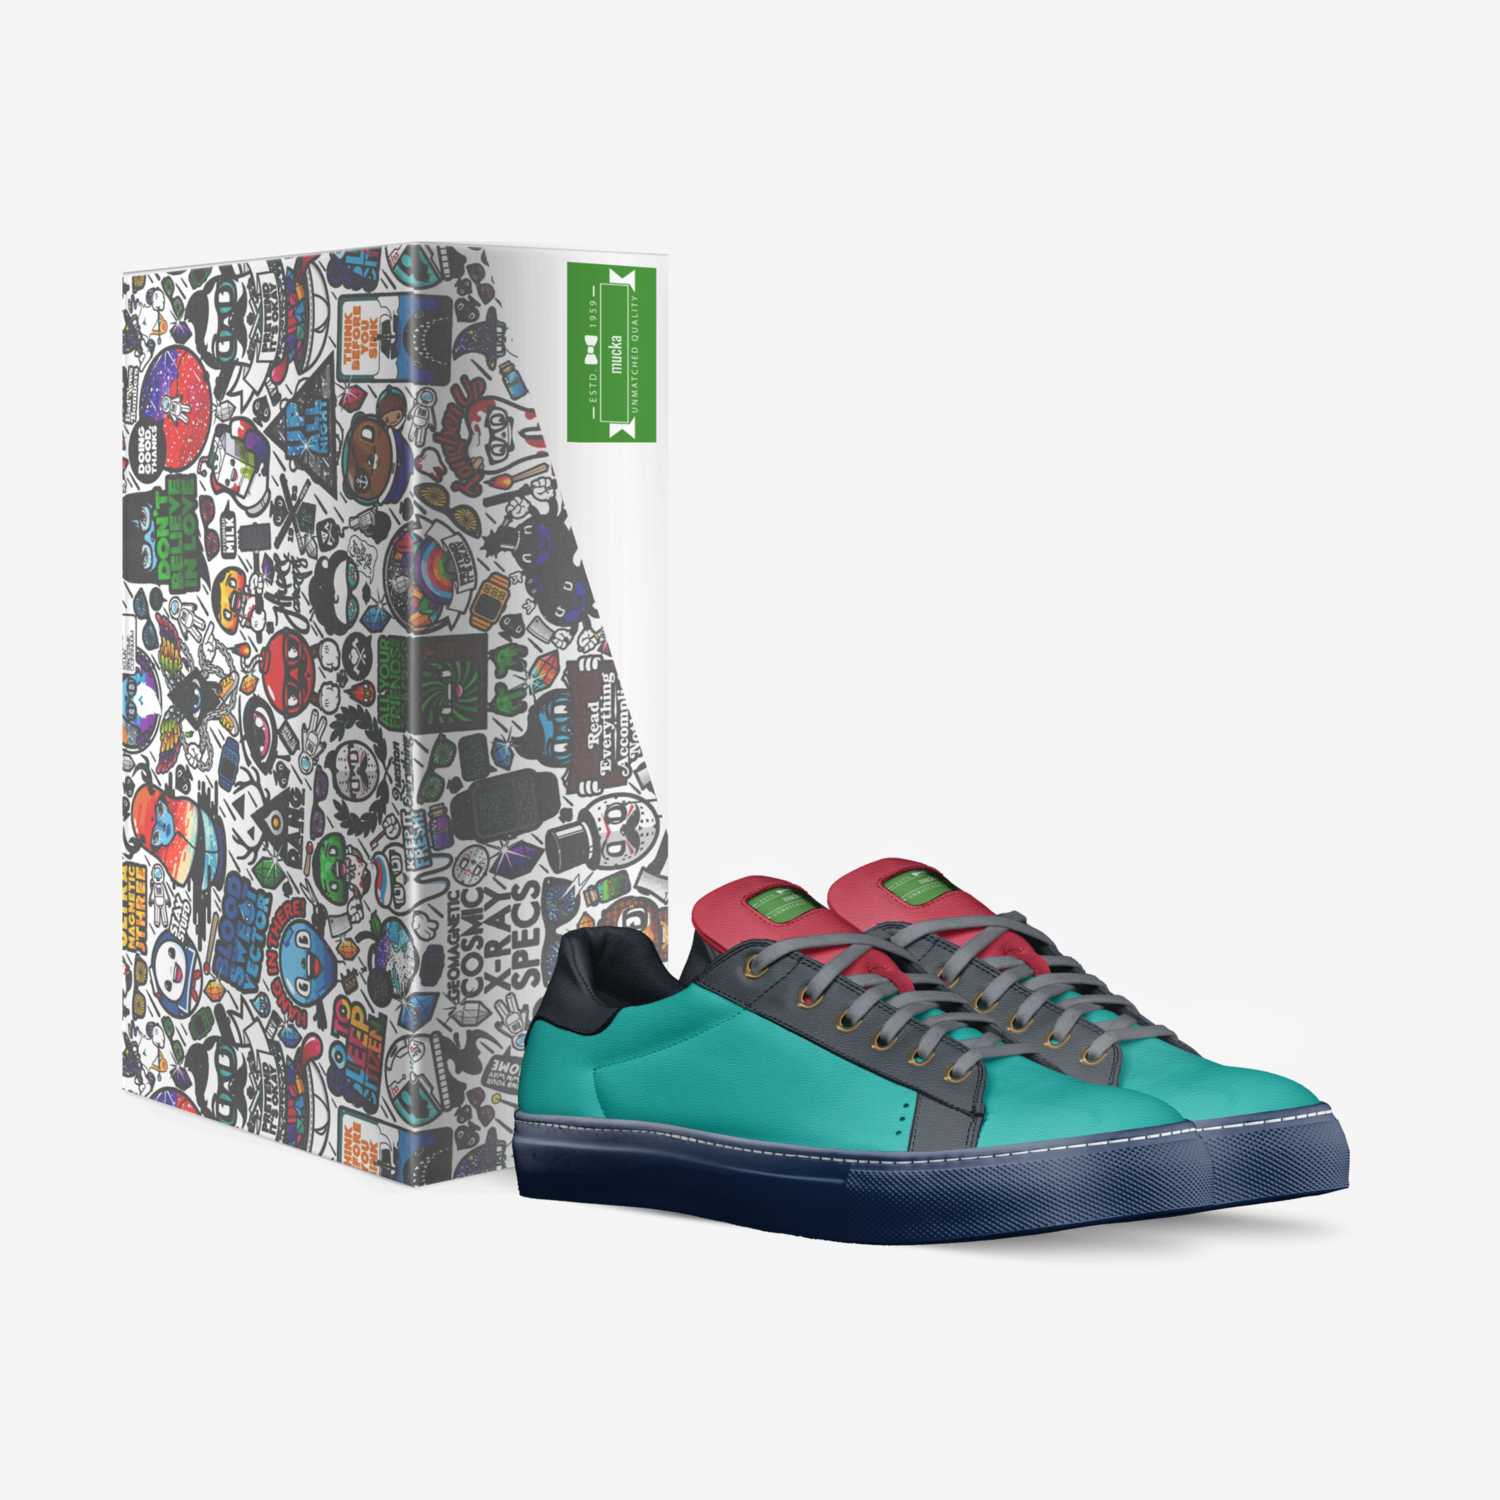 mucka custom made in Italy shoes by Kaya Lata | Box view